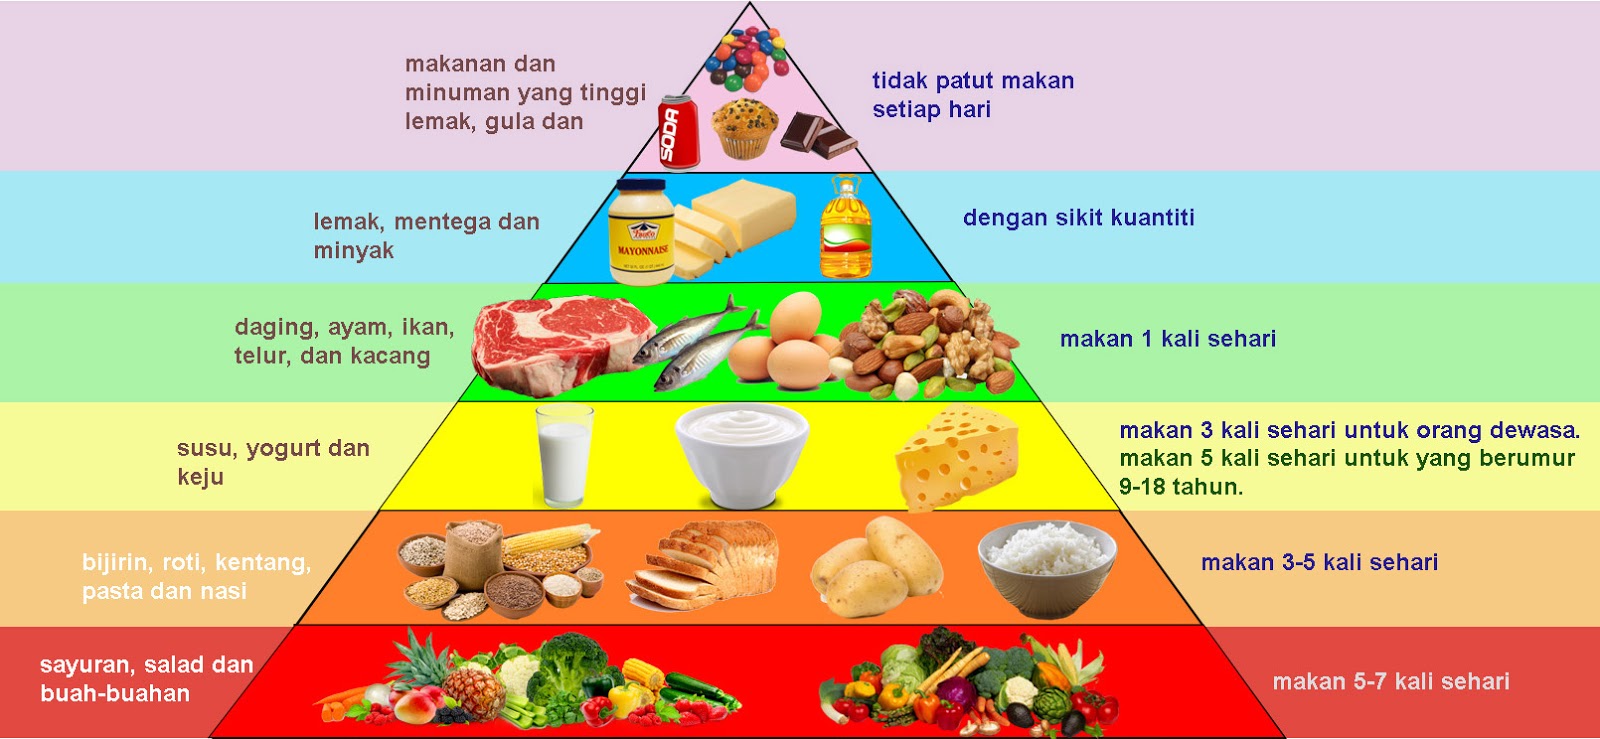 Panduan diet malaysia